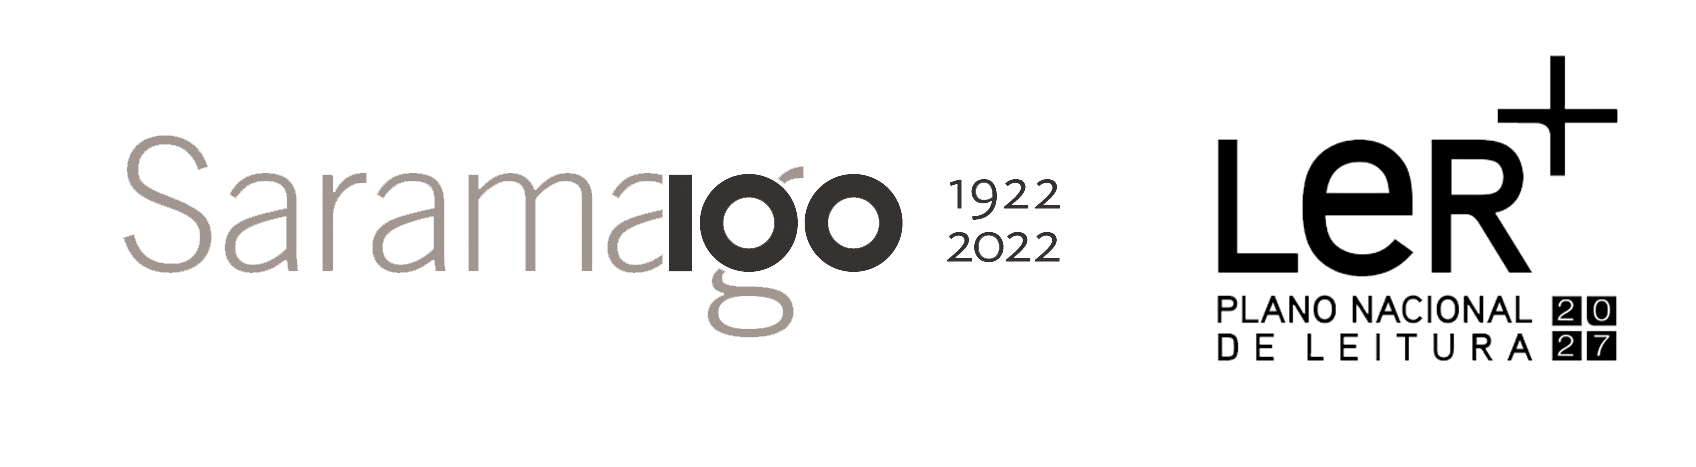 Logos_100Saramago_PNL2027